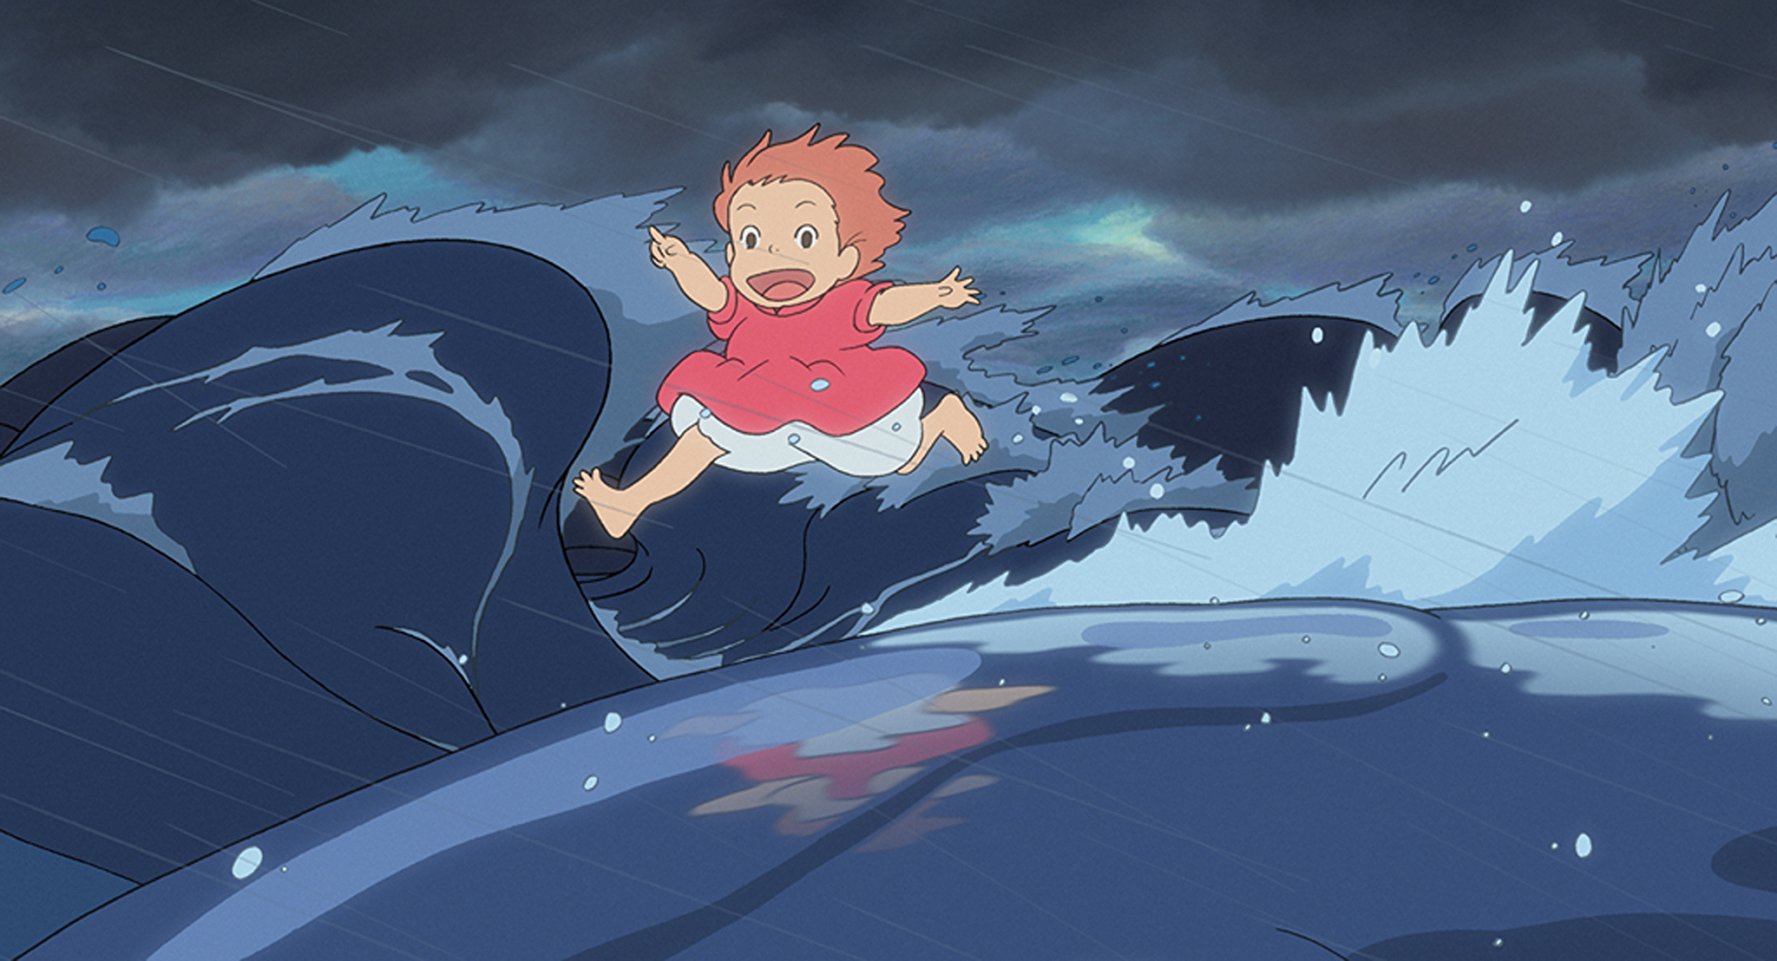 Studio Ghibli's Ponyo Celebrates 10th Anniversary in Theaters